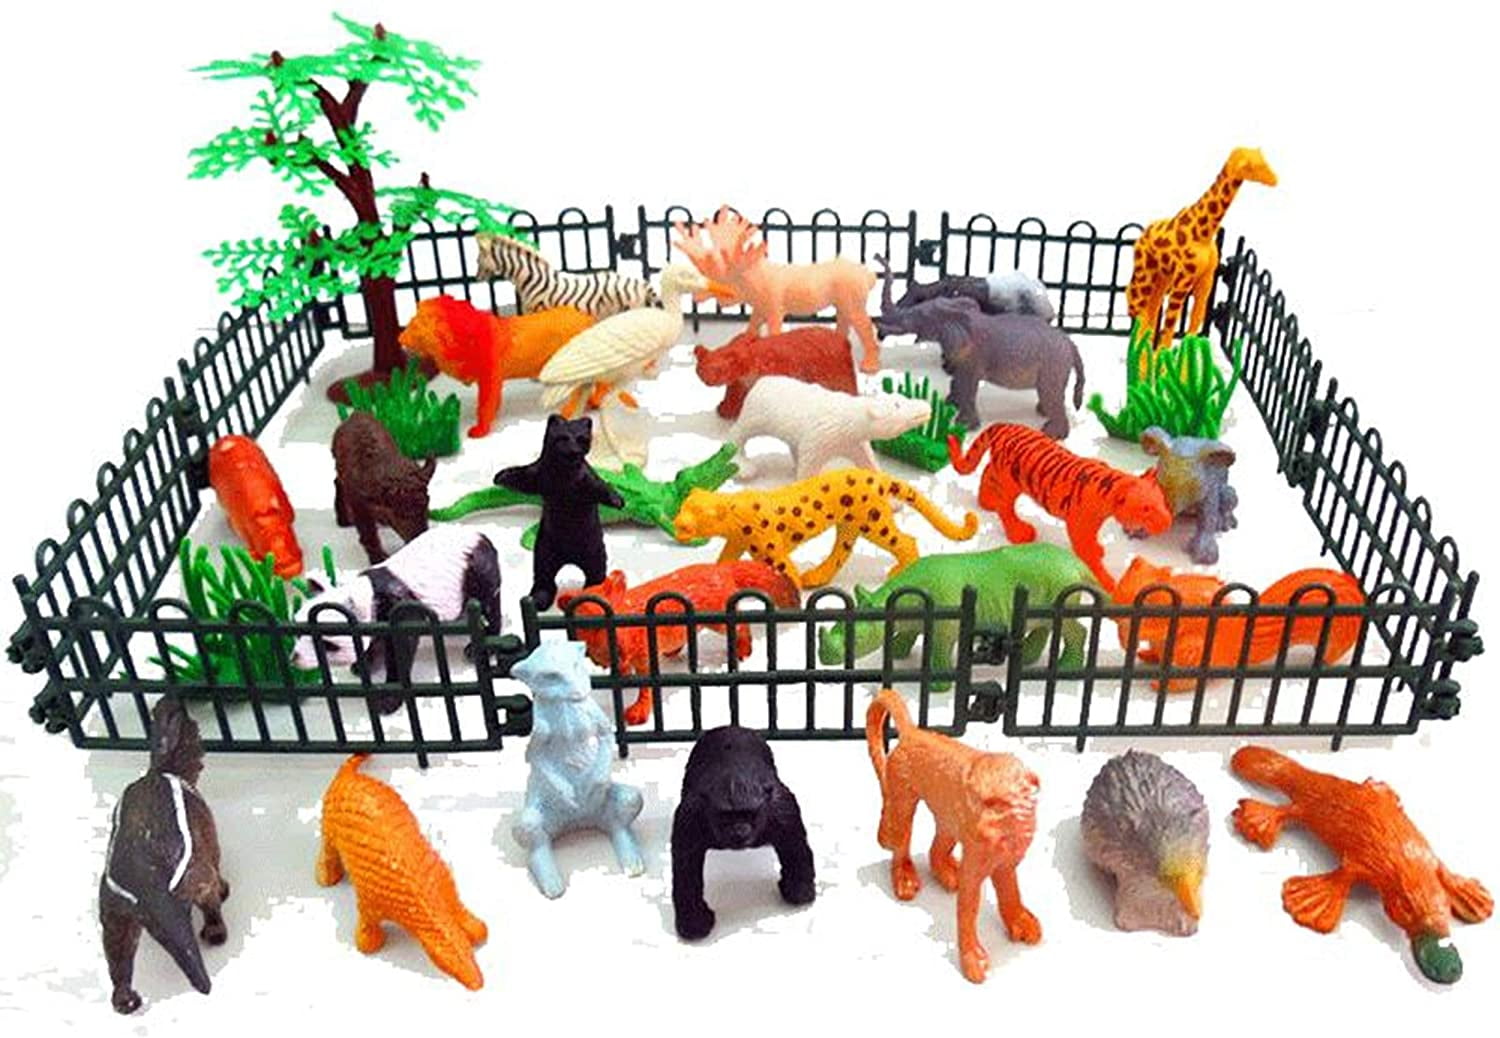 Large Safari Wild Zoo Animal Toy Figures Plastic Tiger Elephant Boxed Set of 8 